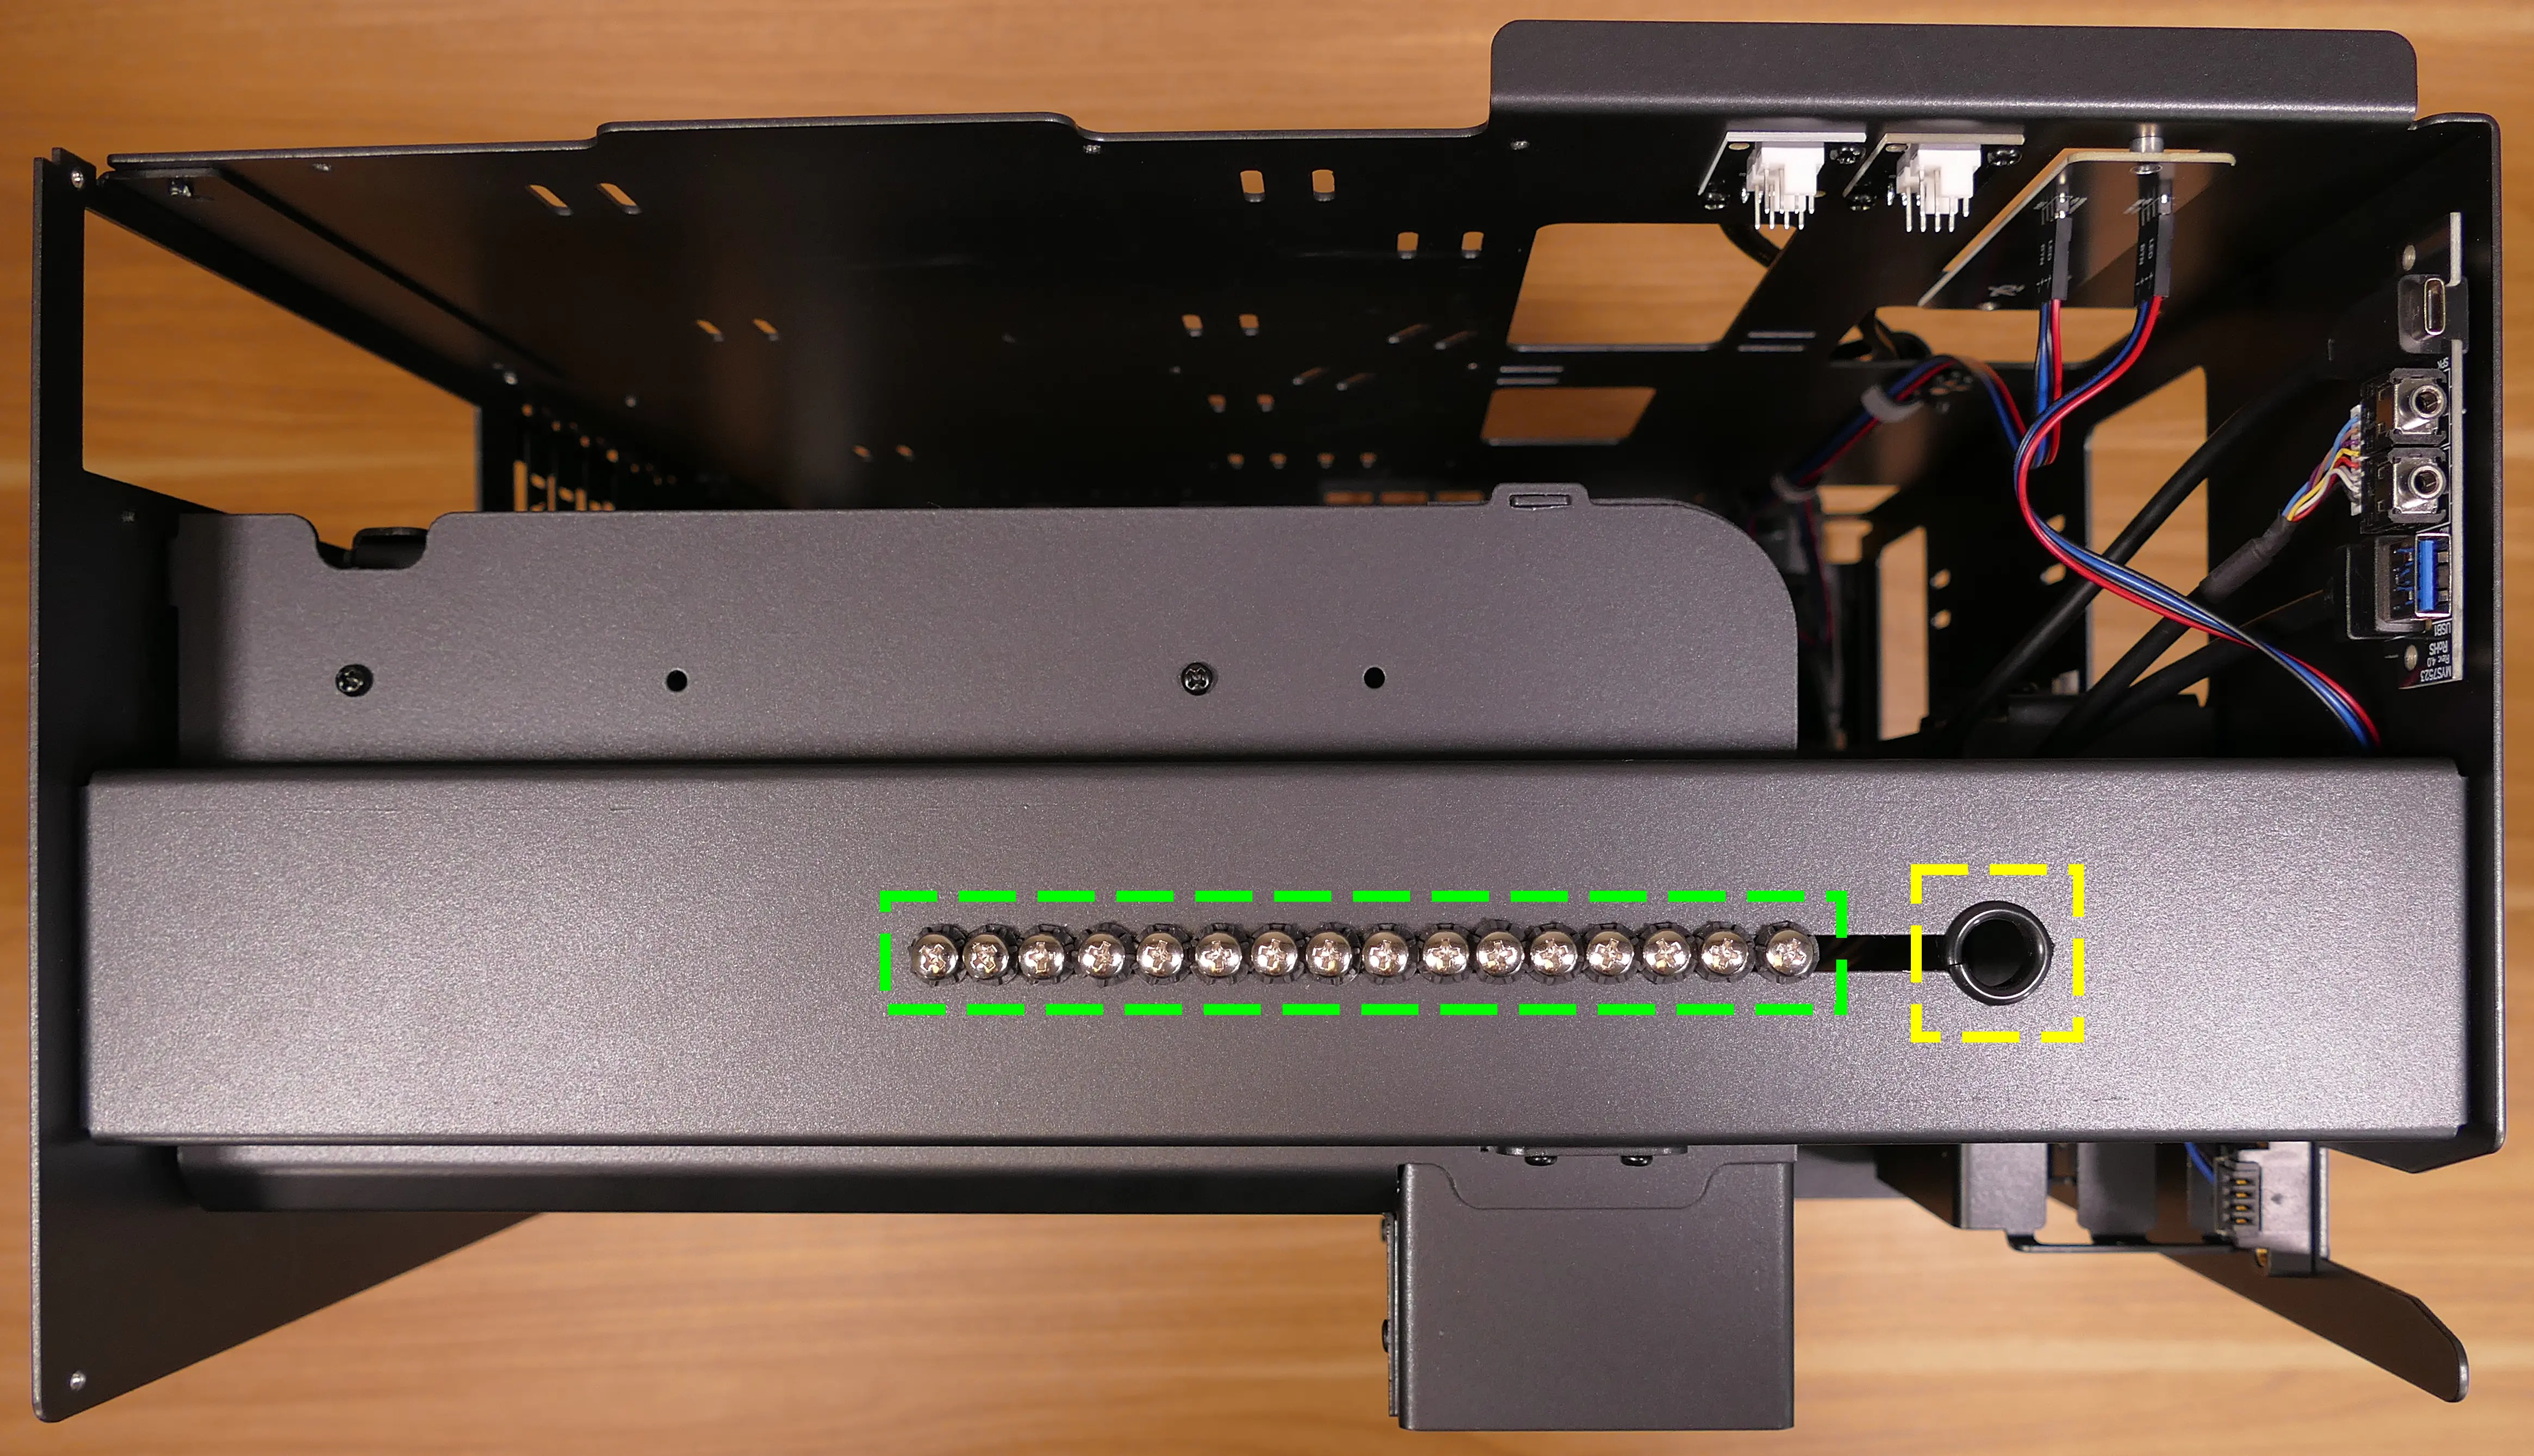 2.5" SATA drive screws on top crossbar